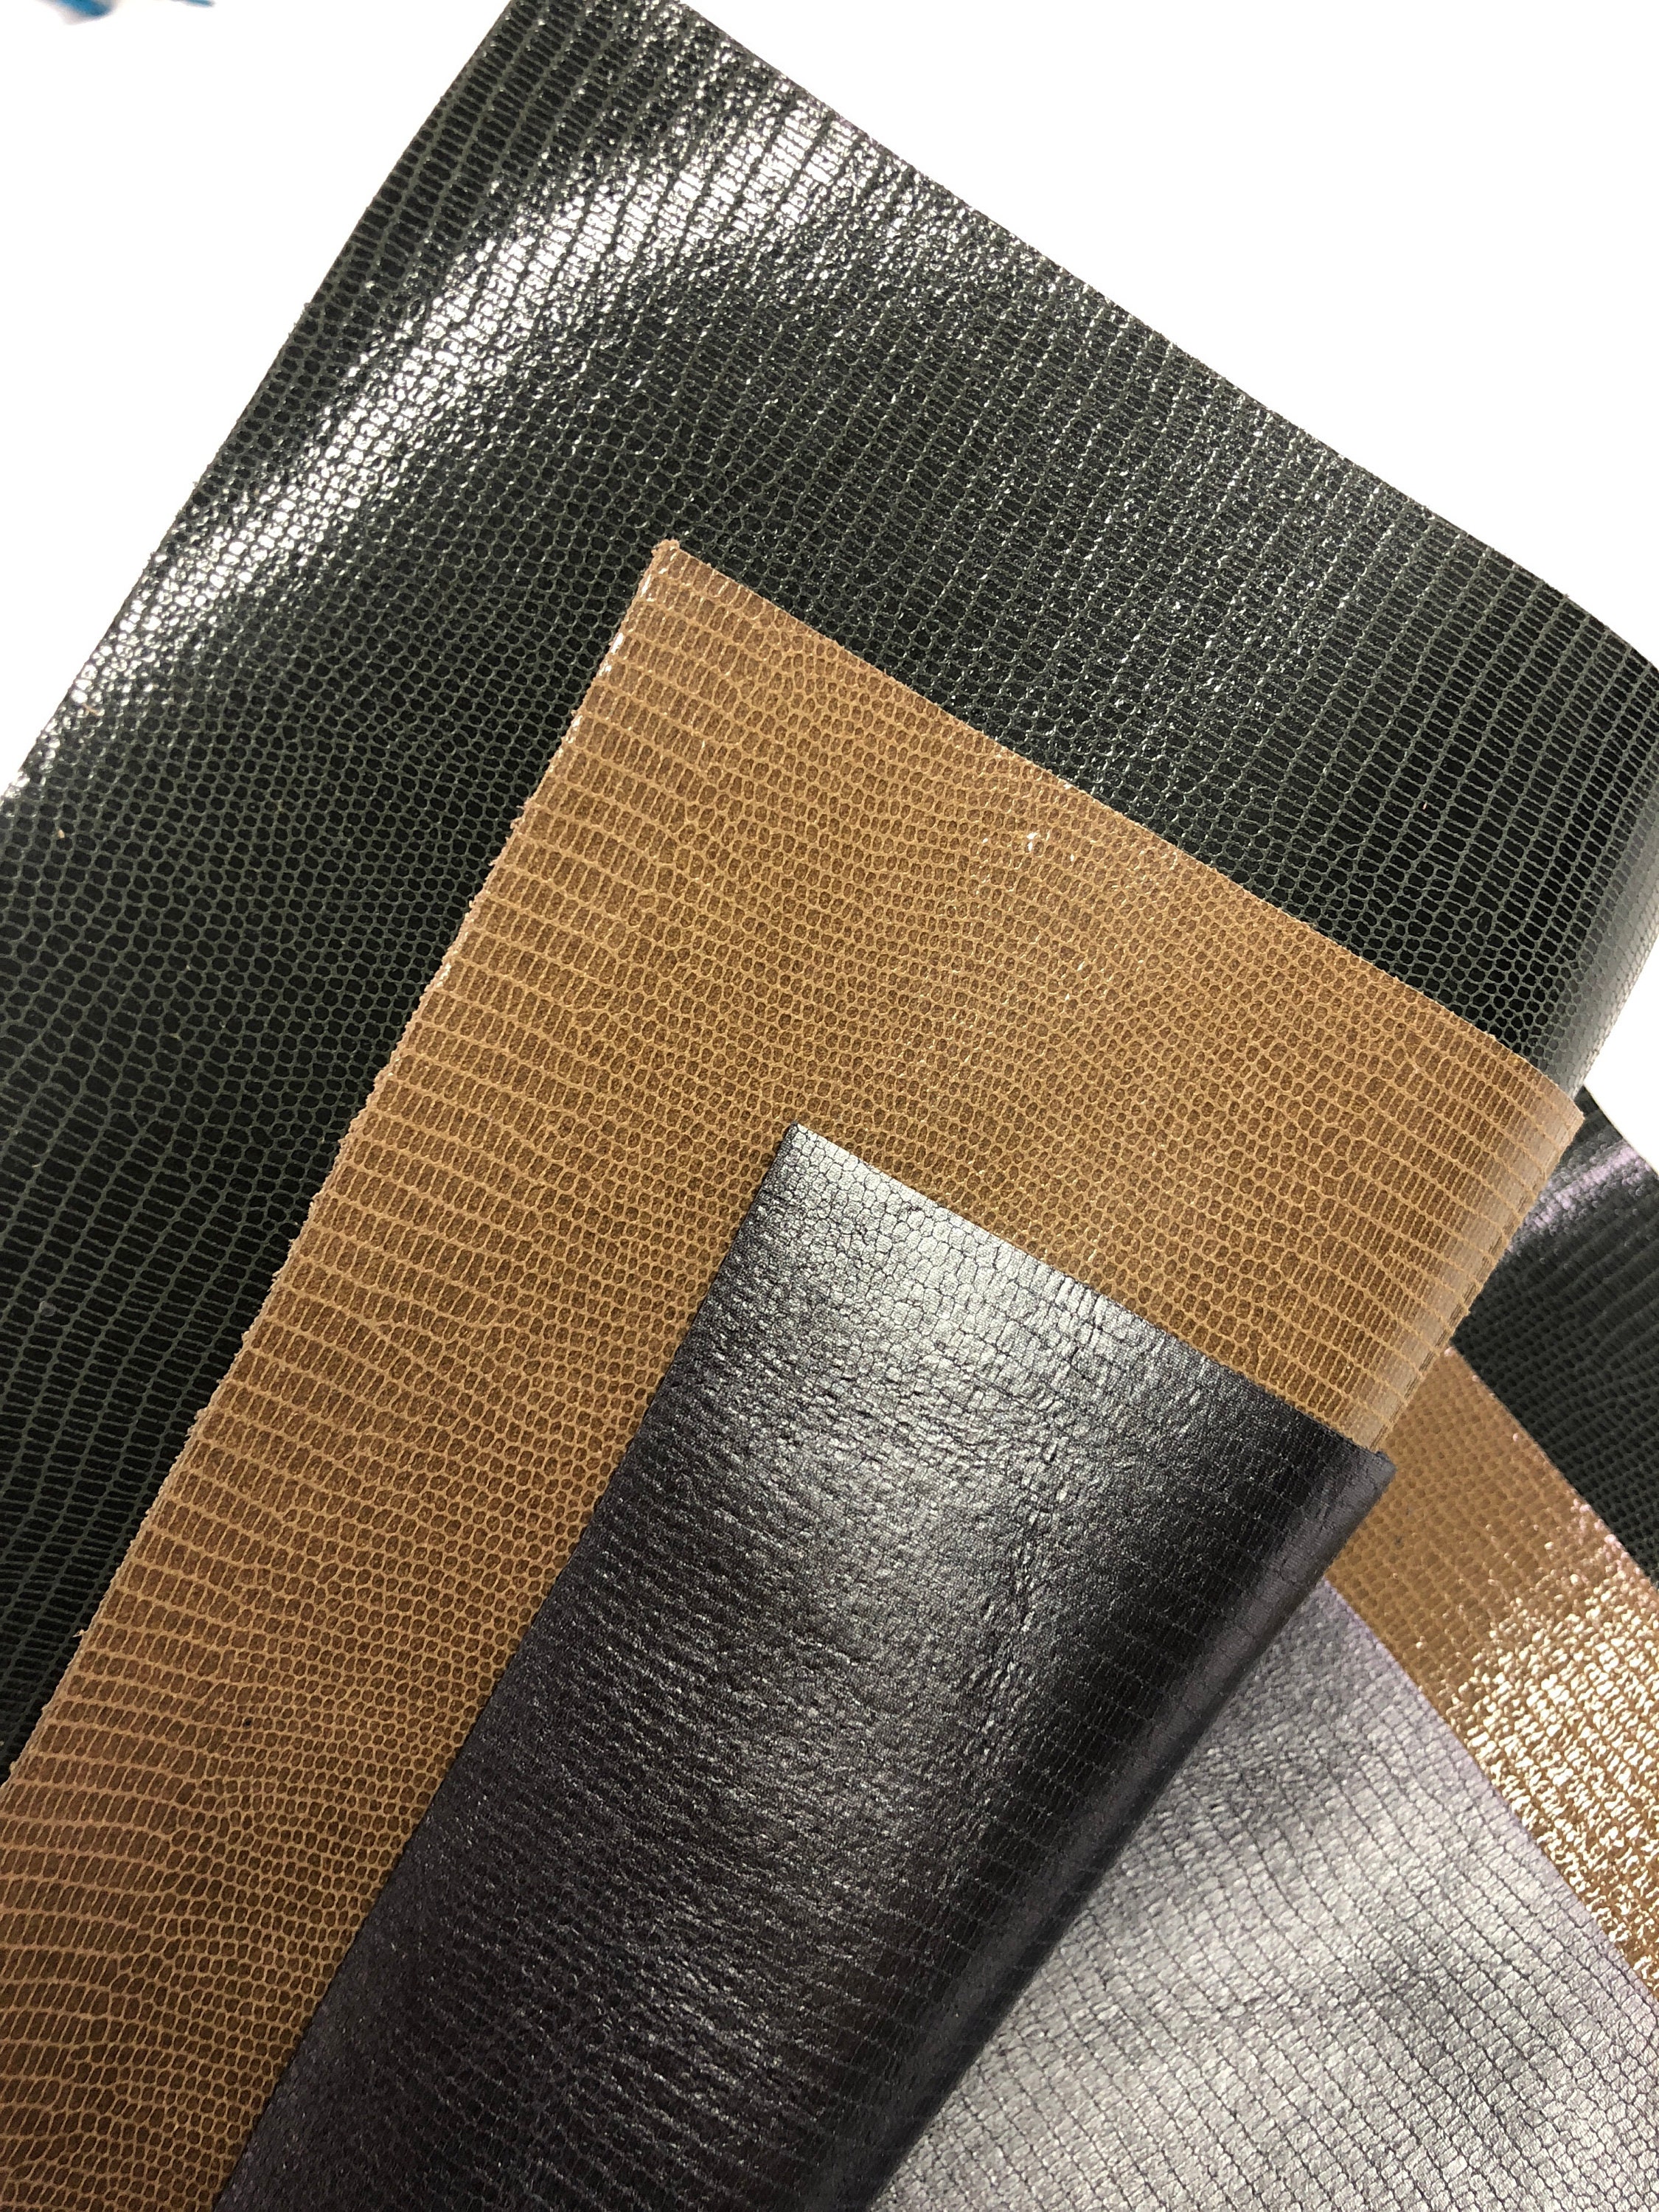 MINI LIZARD 10x10 LEATHER Genuine Printed Leather 